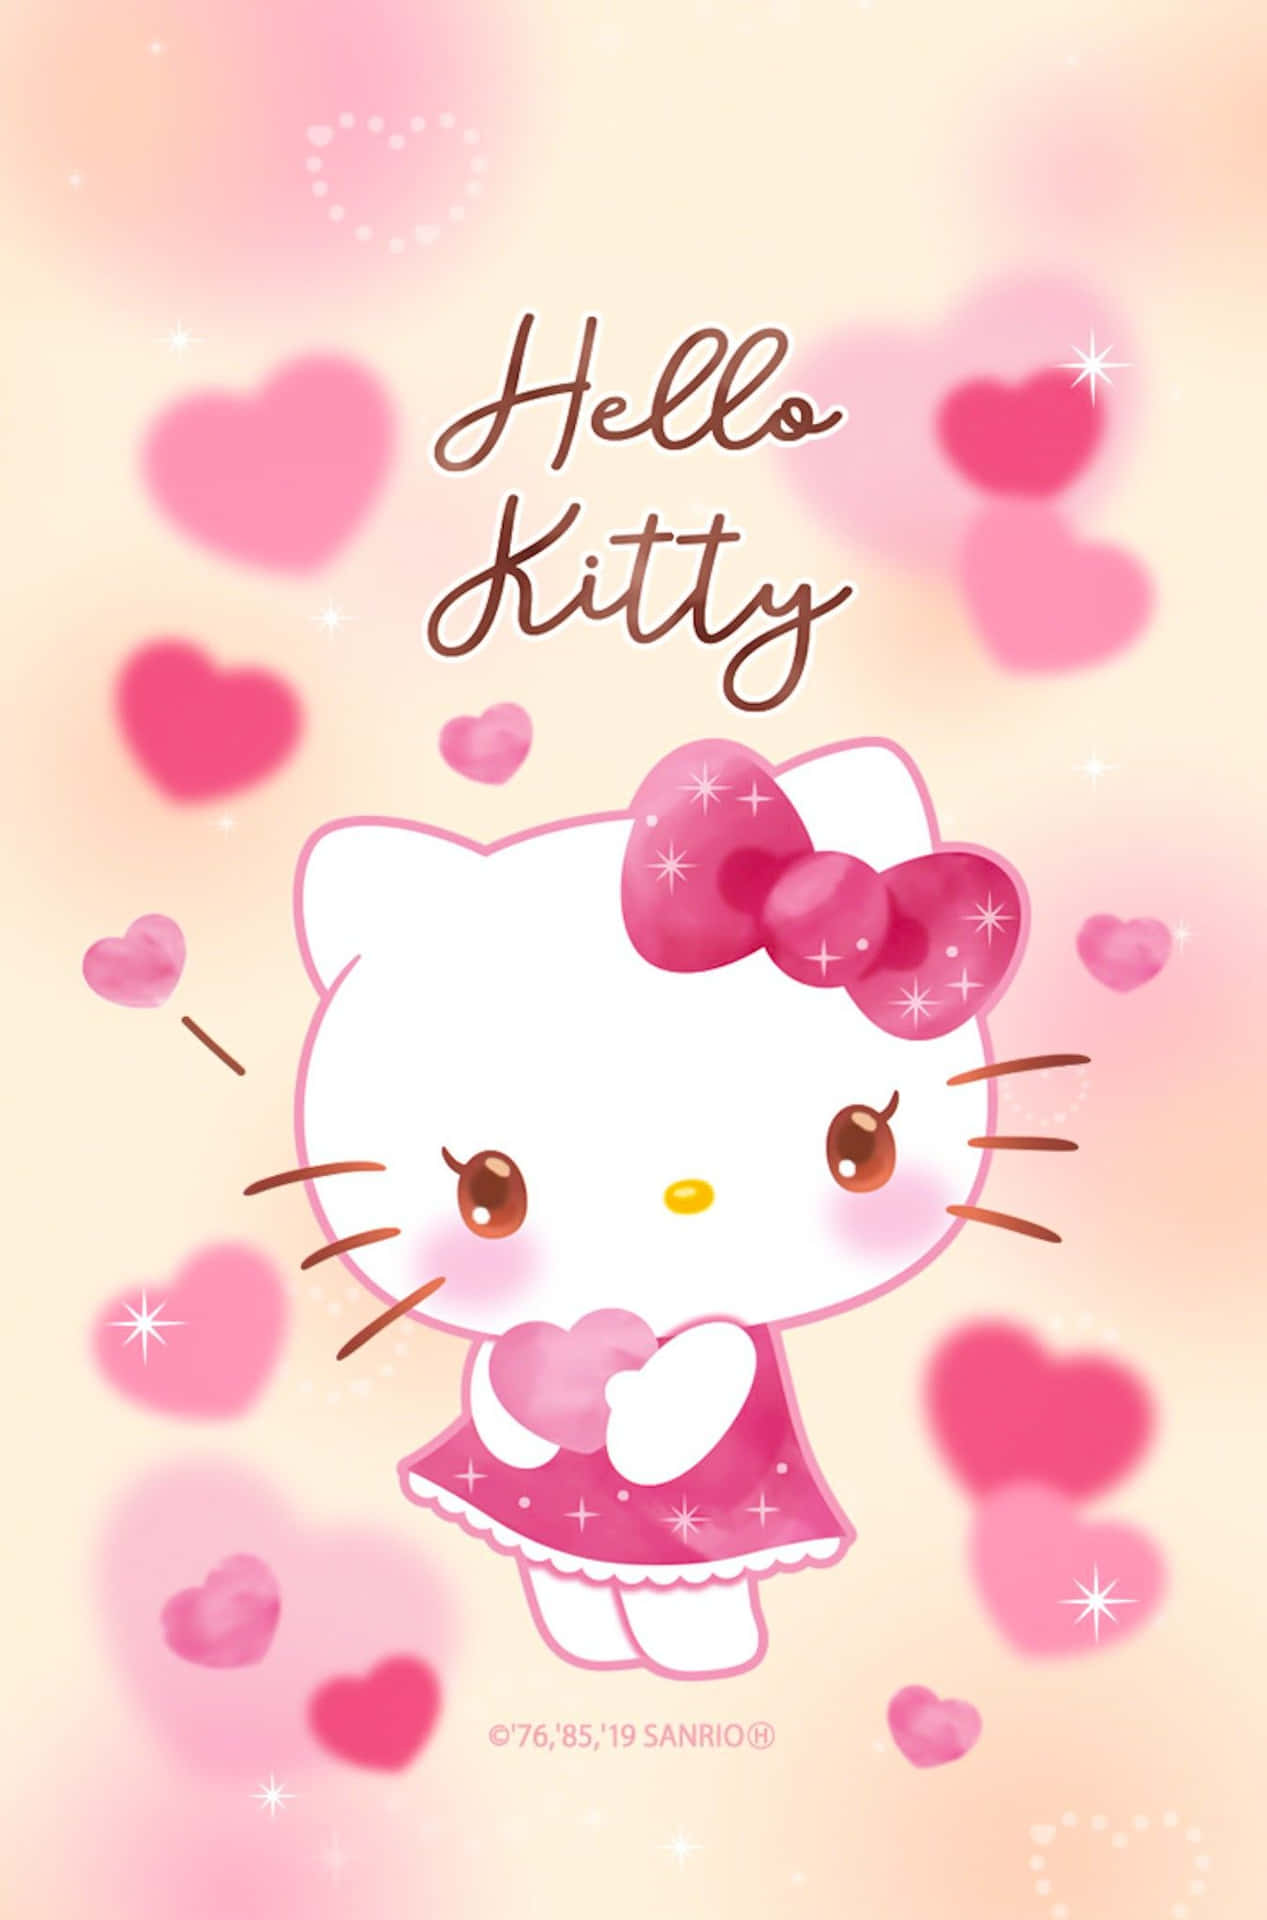 "Hello Kitty, the adorable mascot that spreads joy everywhere!"